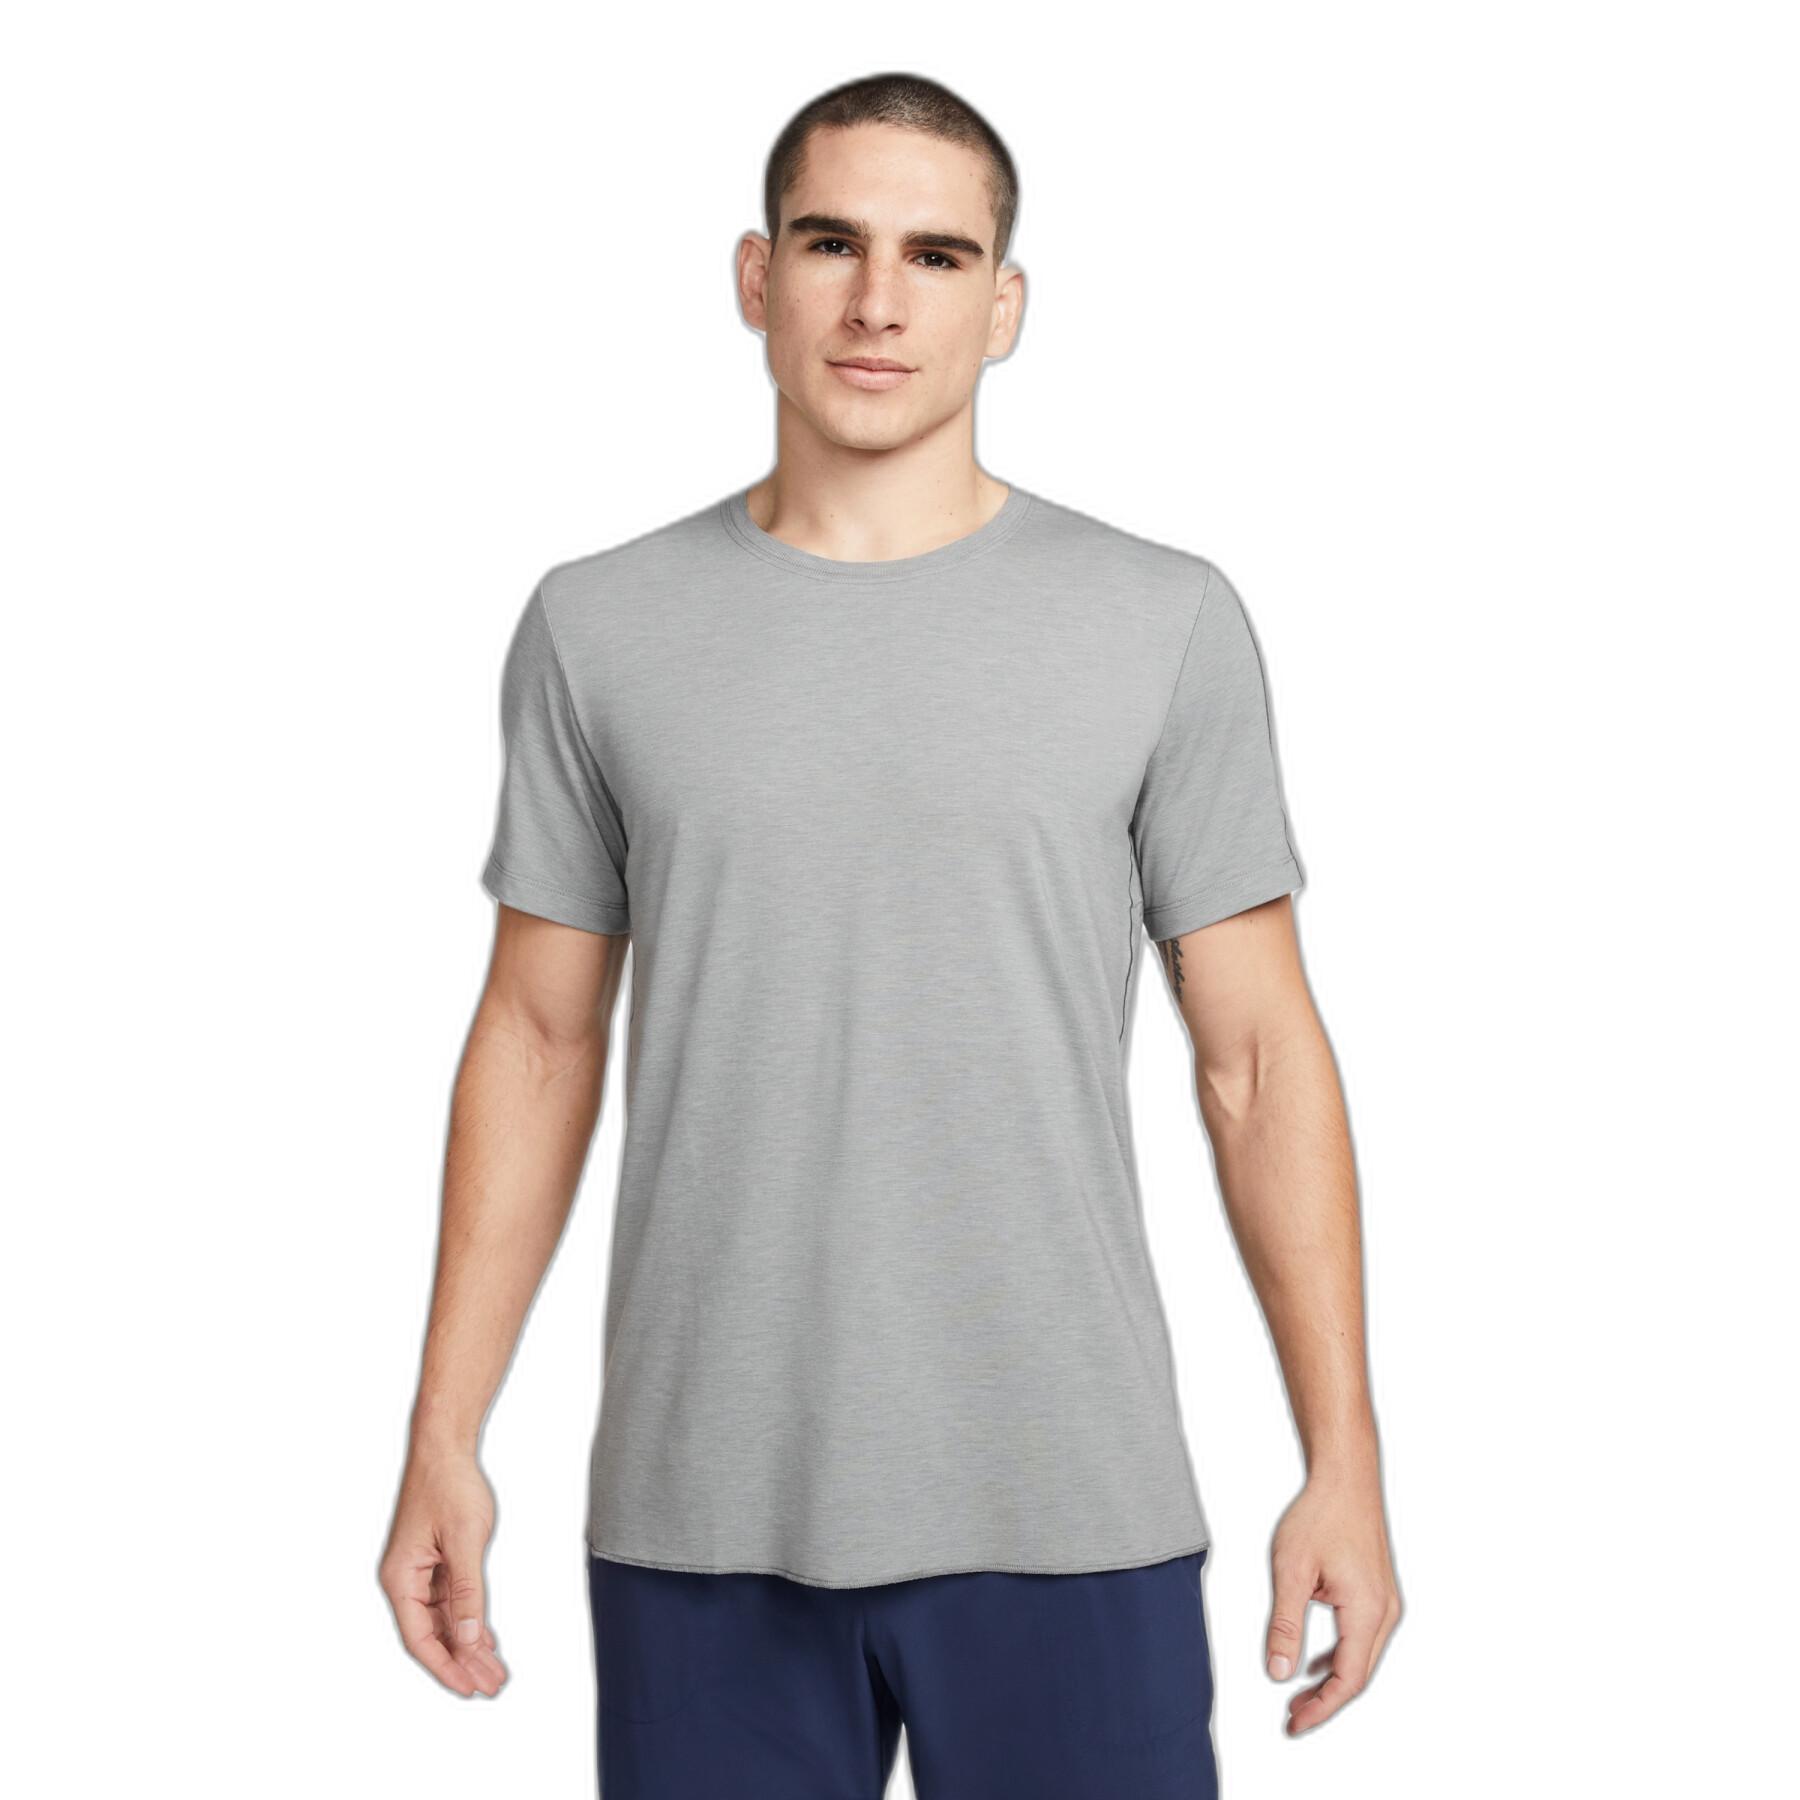 Jersey Nike Yoga Dri-FIT - T-shirts - Men's Clothing - Fitness